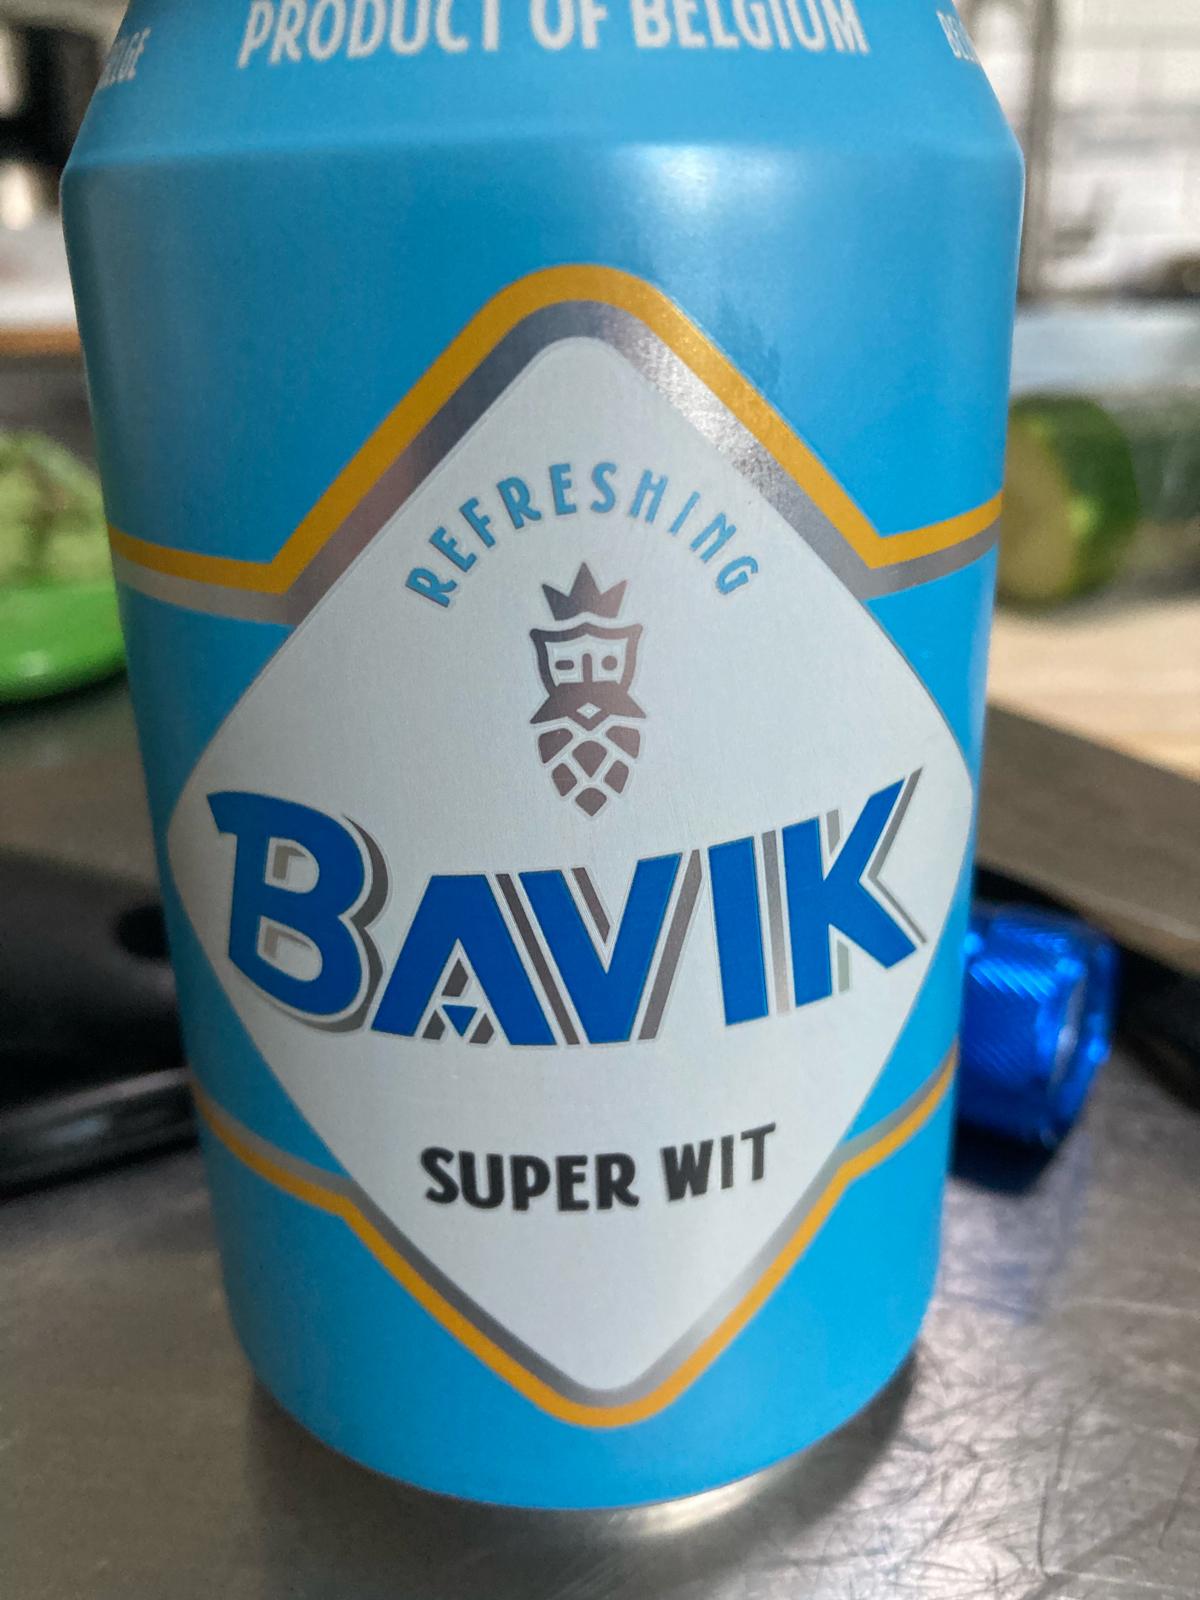 Bavik Superwit